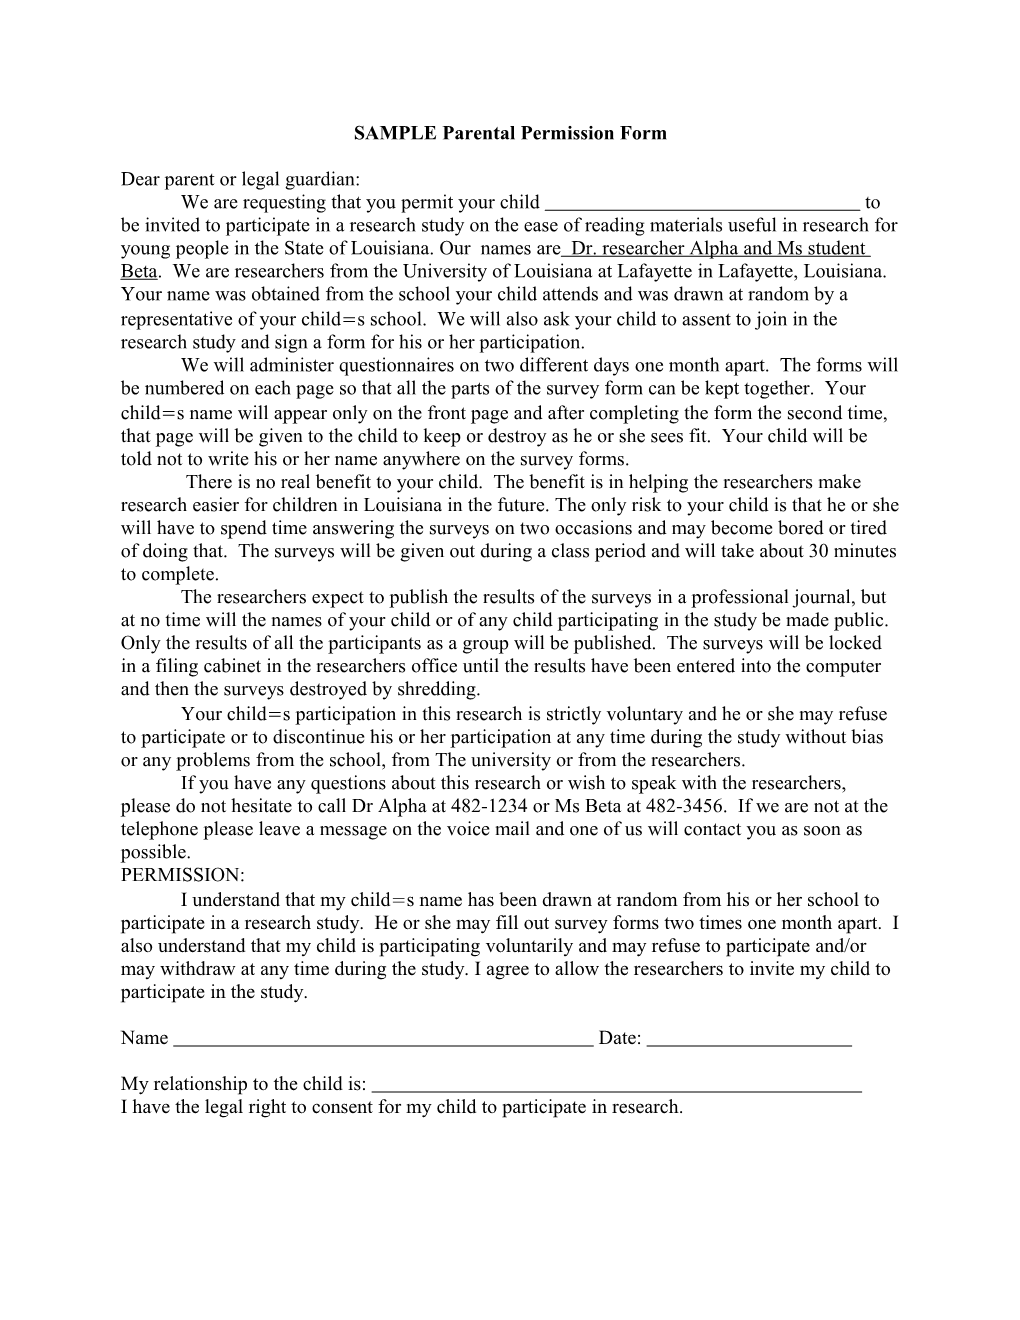 SAMPLE Parental Permission Form